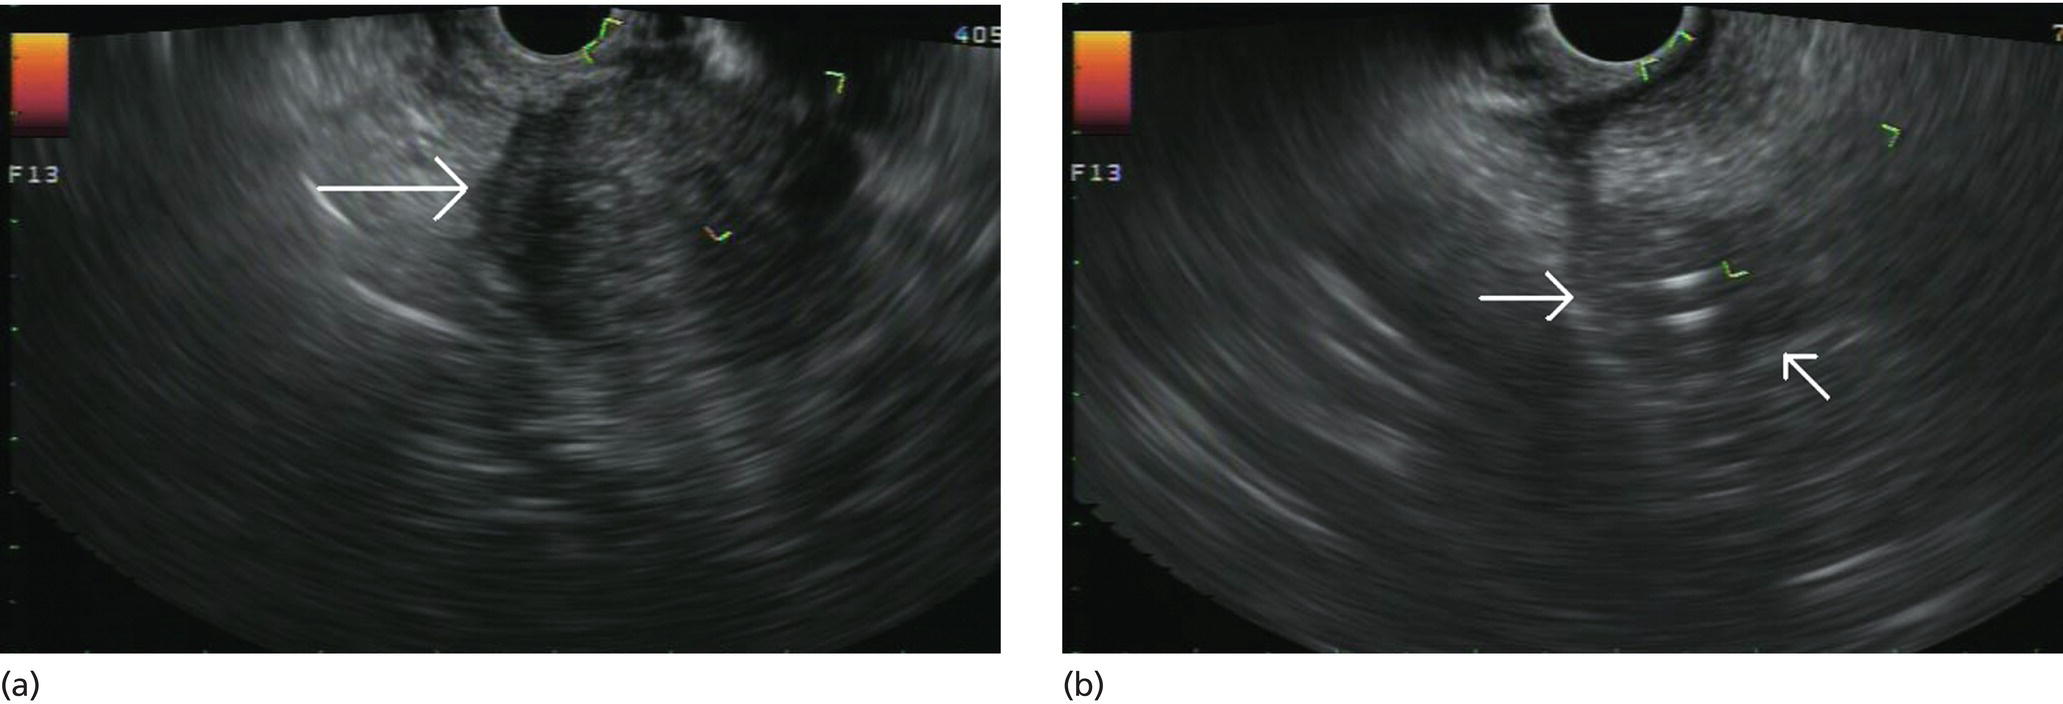 Photos depict (a) Representative EUS image of a large pancreatic adenocarcinoma (arrow). (b) Representative EUS image of a small pancreatic adenocarcinoma (arrows).